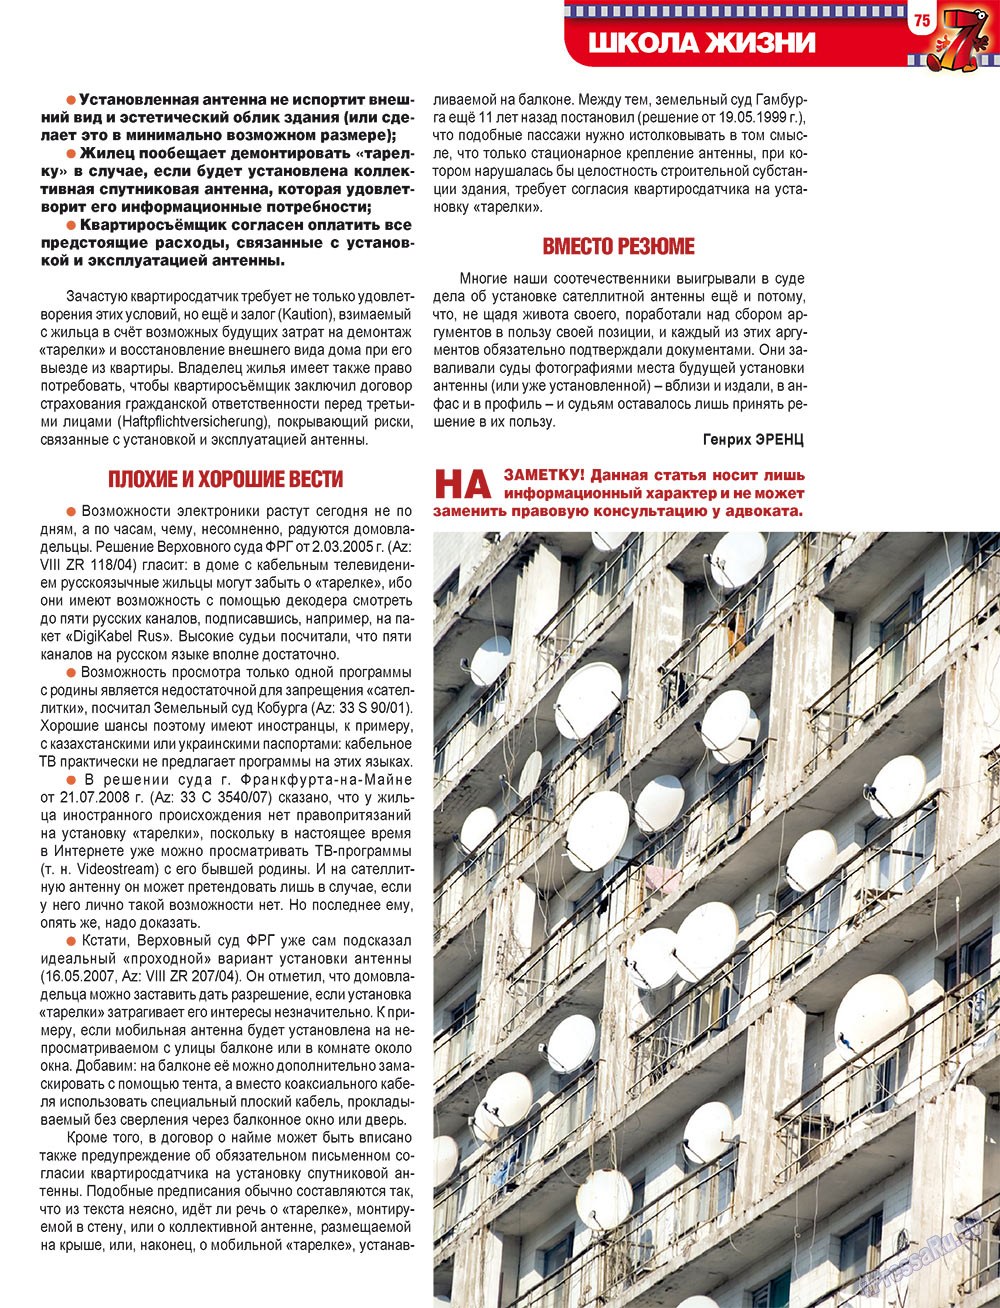 7плюс7я (журнал). 2010 год, номер 47, стр. 75